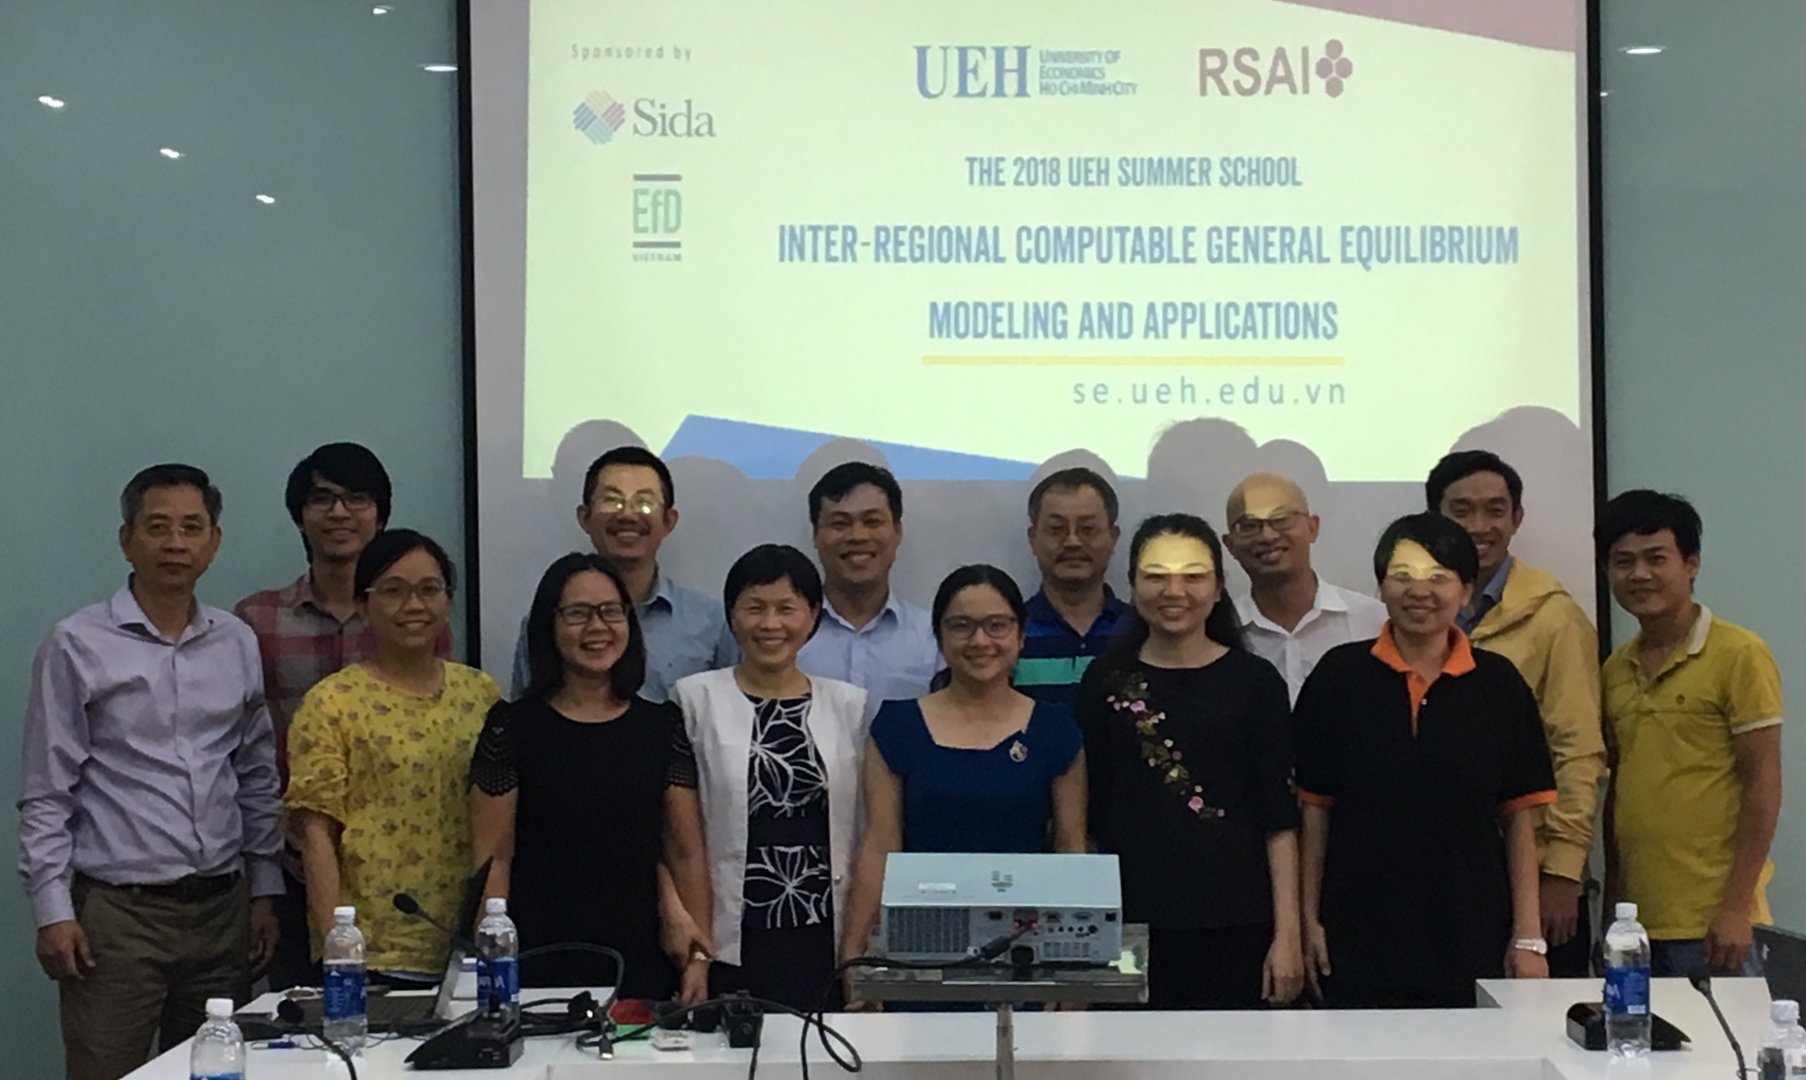 August 2018 Vietnam Regional CGE course held at University of Economics, Ho Chi Minh City